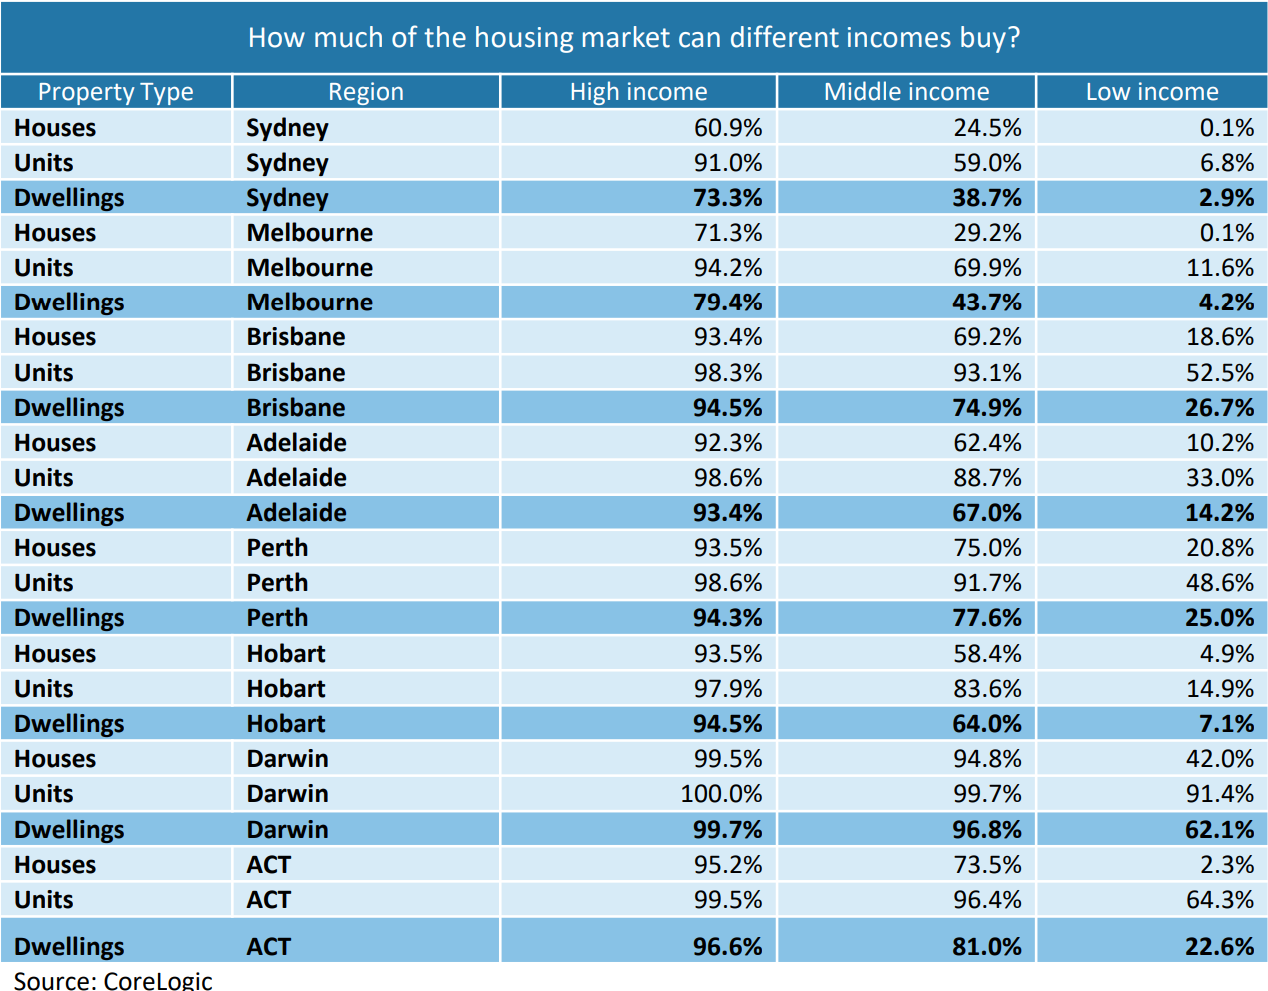 Housing affordability across Australia